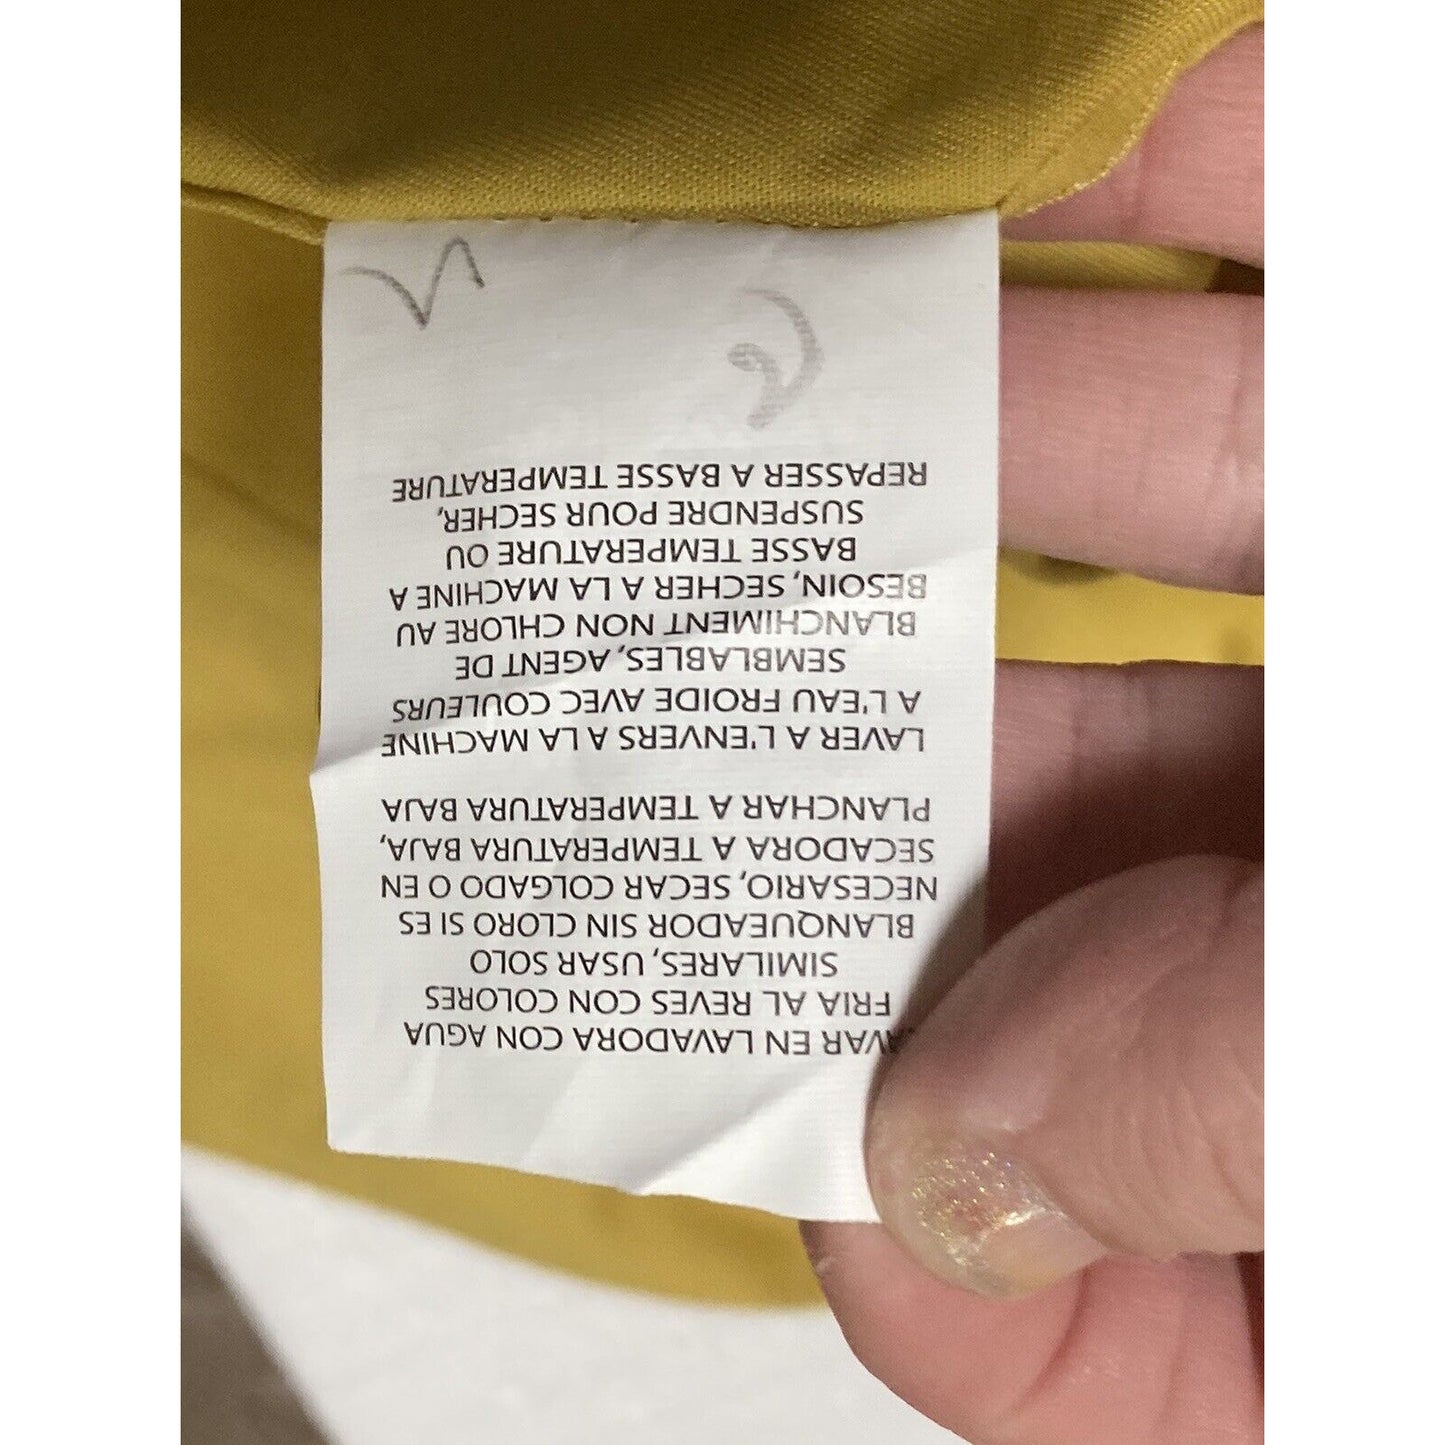 Wrangler Authentic Long Sleeve Button Down Shirt XL Mustard Yellow 100% Cotton